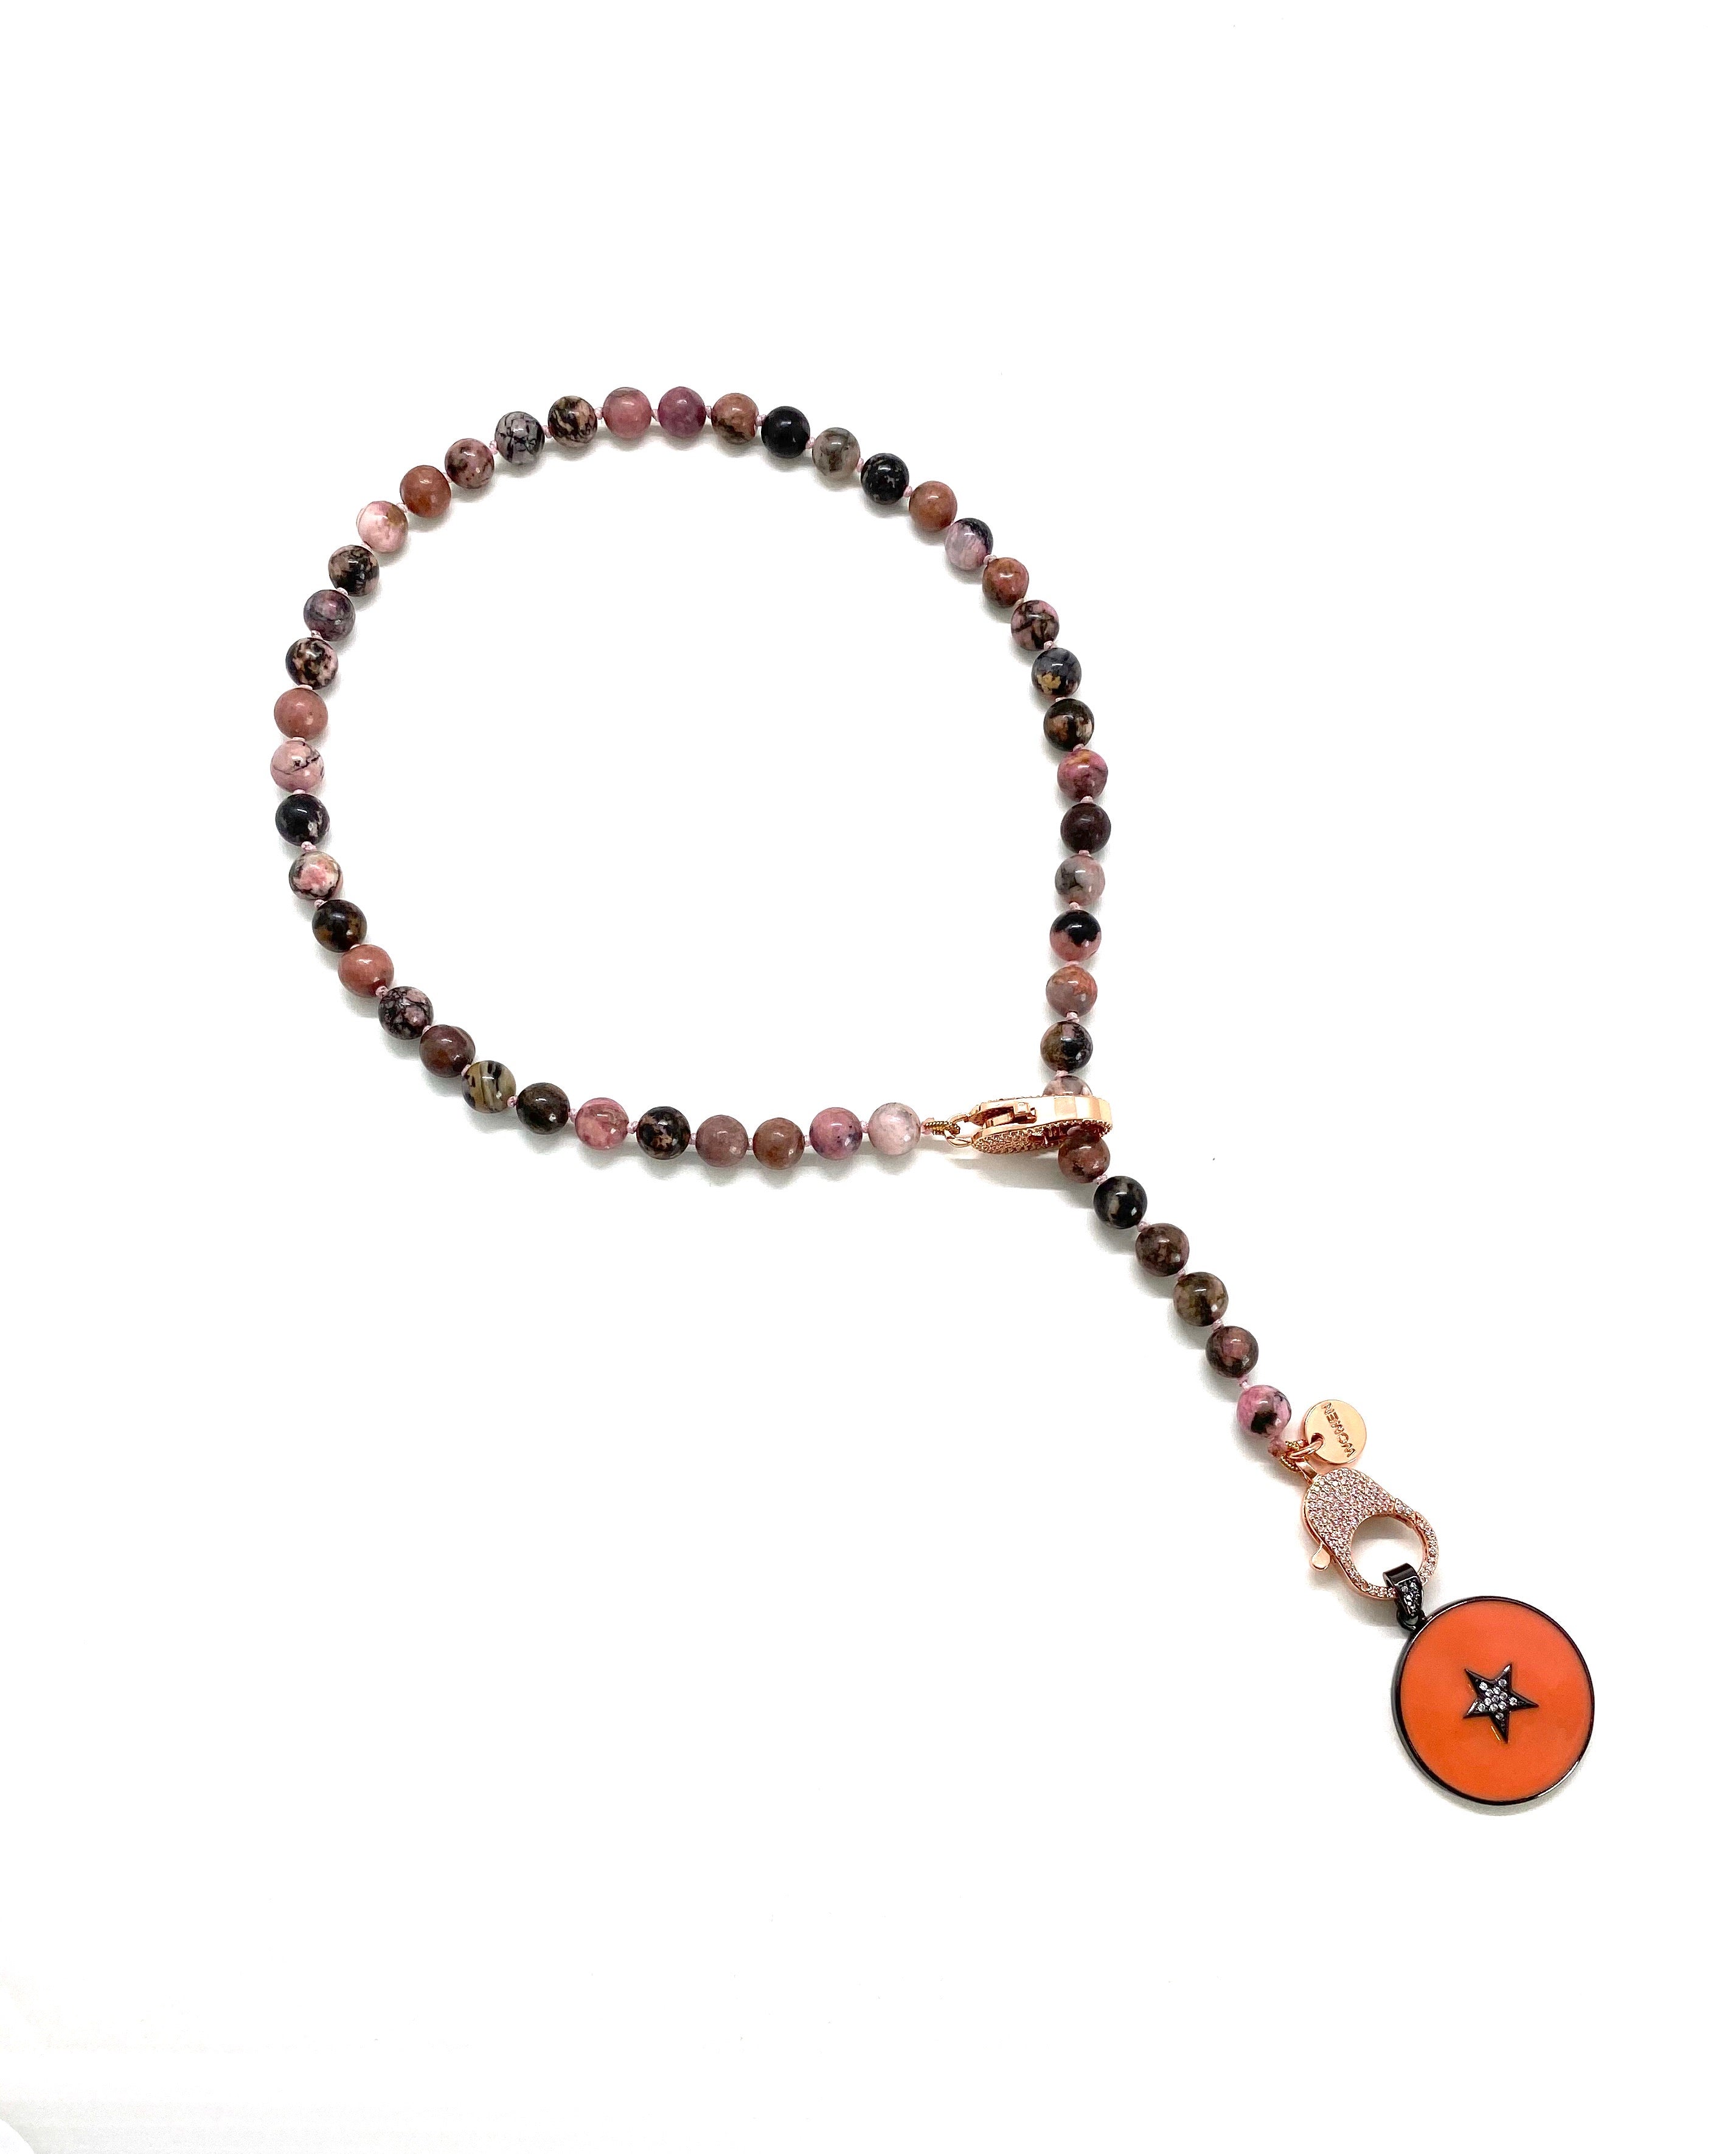 Lace rhodonite Gaia necklace, round orange pendant, rose gold zirconia clips